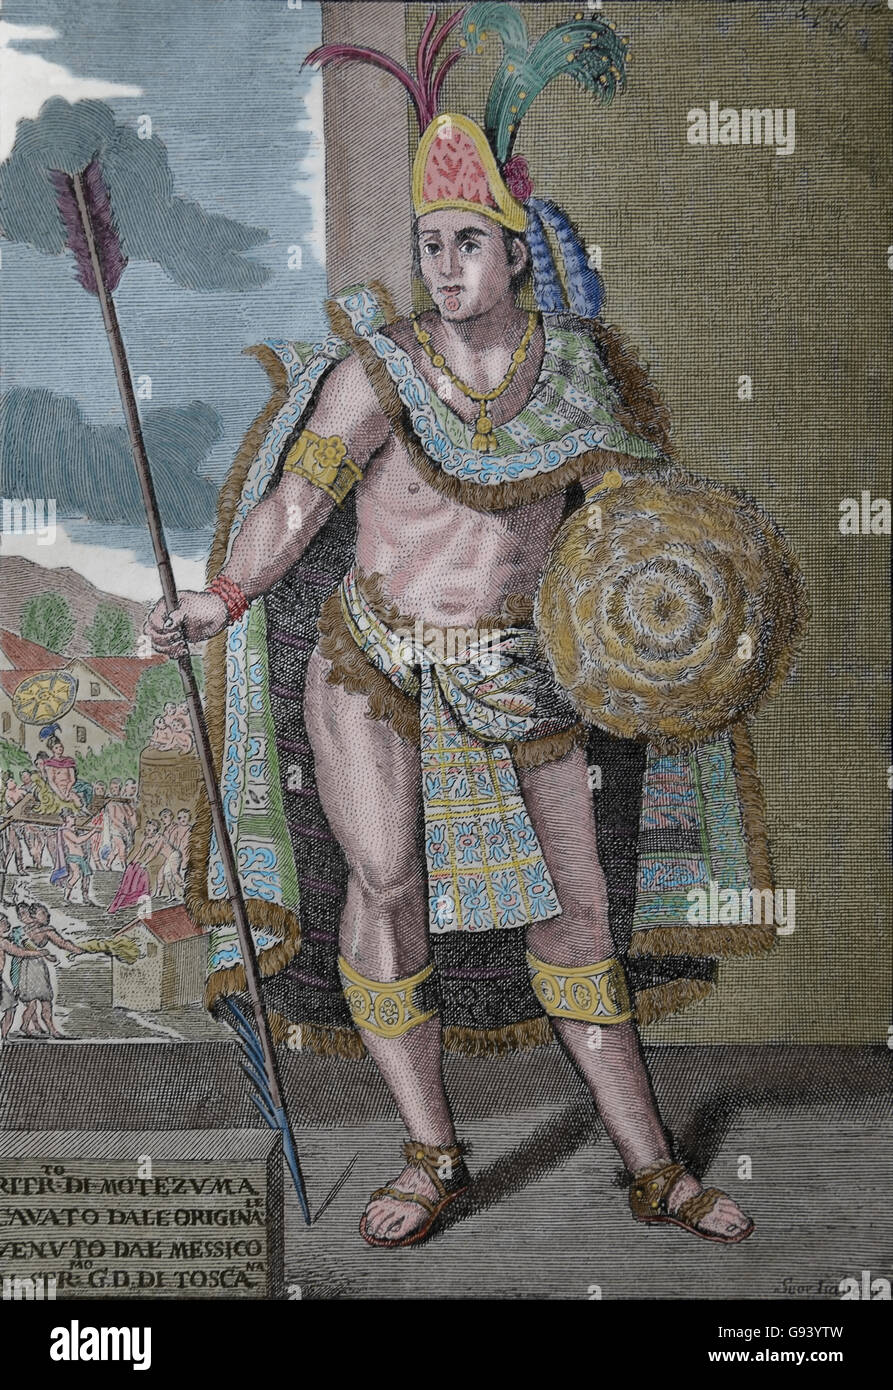 Moctezuma II (1466 Ð 1520). Ruler of Tenochtitlan, Mesoamerica. Portrait. Engraving. 19th century. Stock Photo